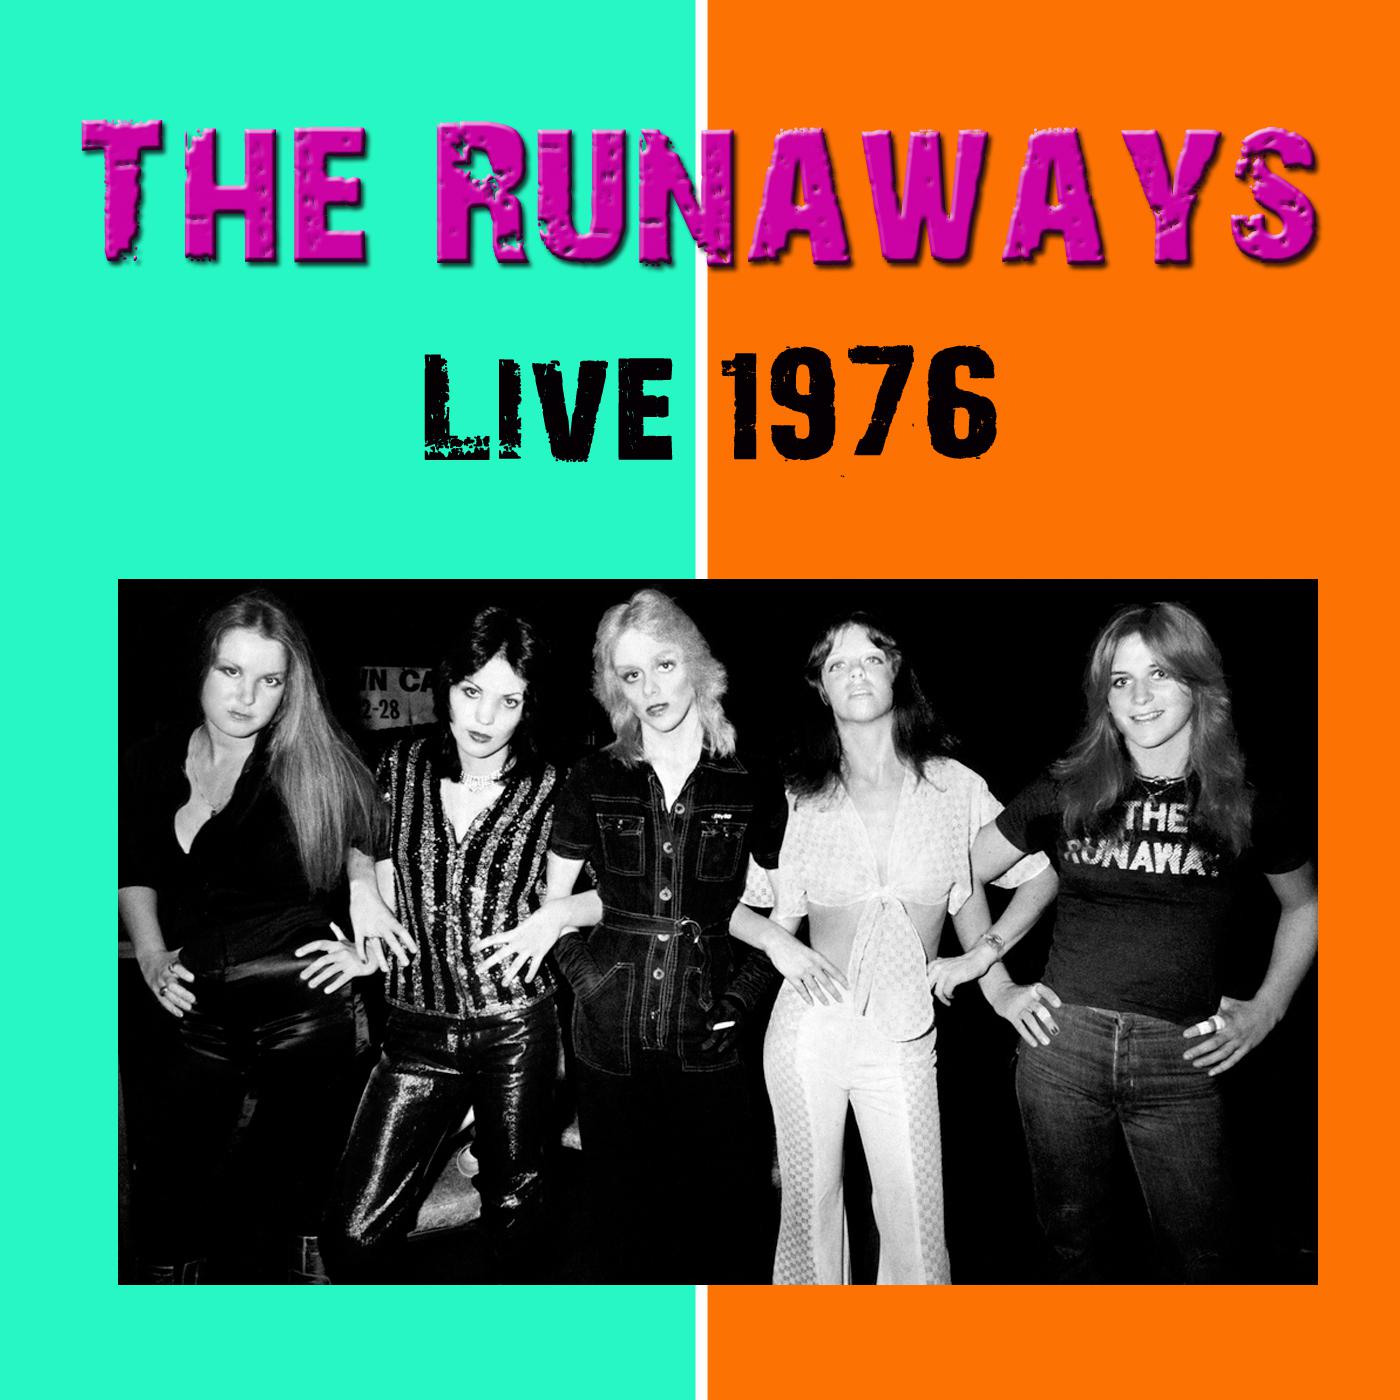 The Runaways Live 1976